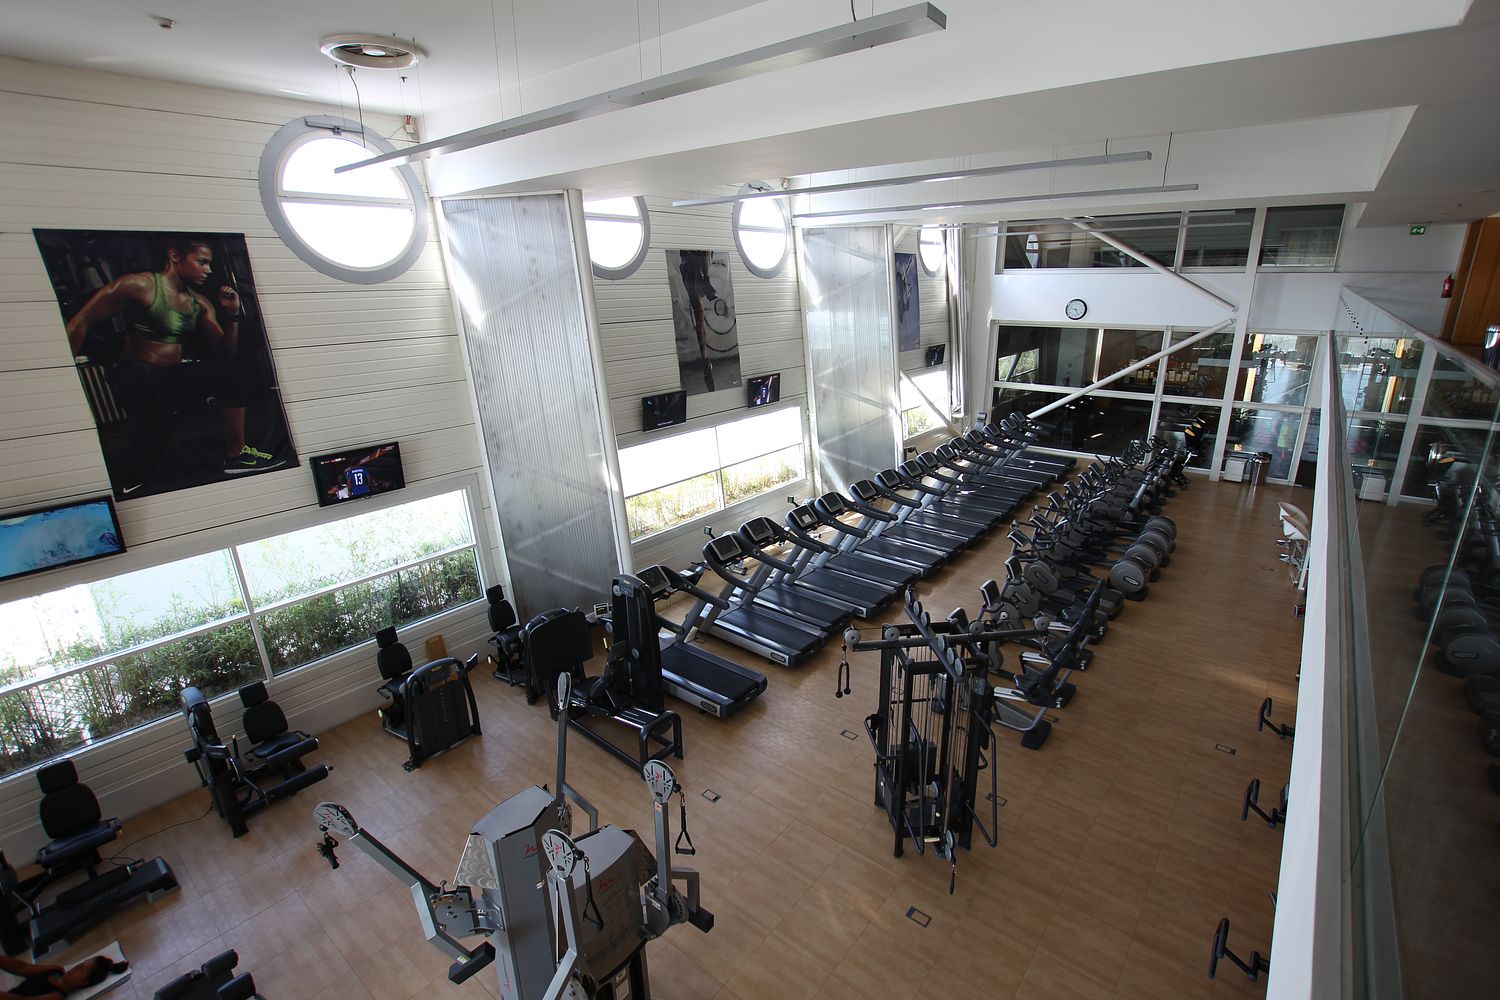 Kalorias Torres Vedras gym in Torres Vedras, Portugal